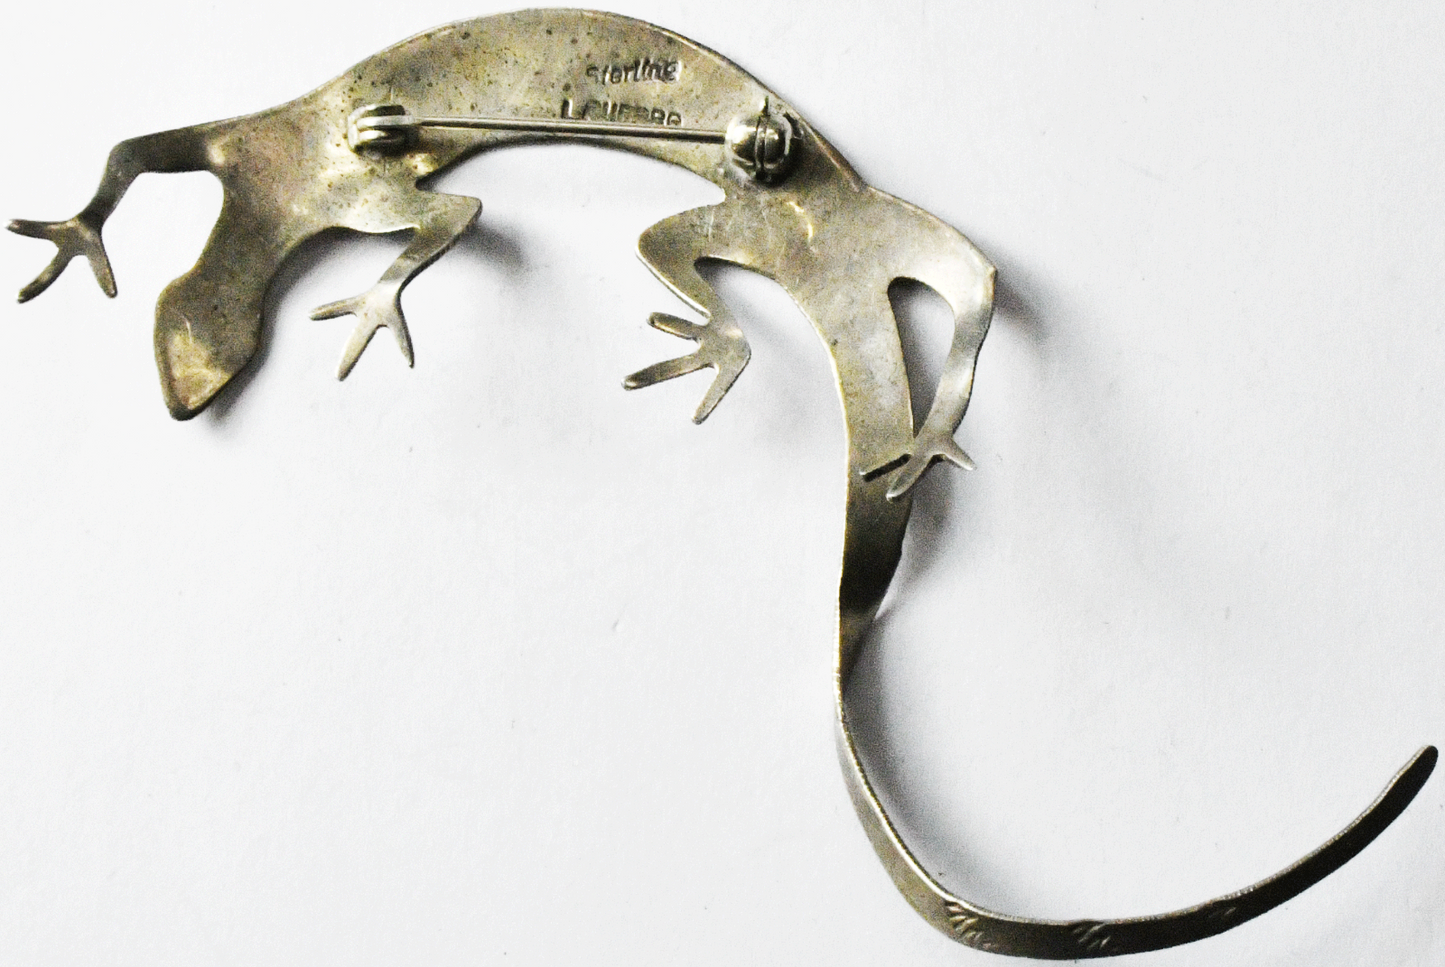 Sterling Silver Vintage L Guerro Lizard Chameleon Brooch Pin 3-1/4" x 37mm